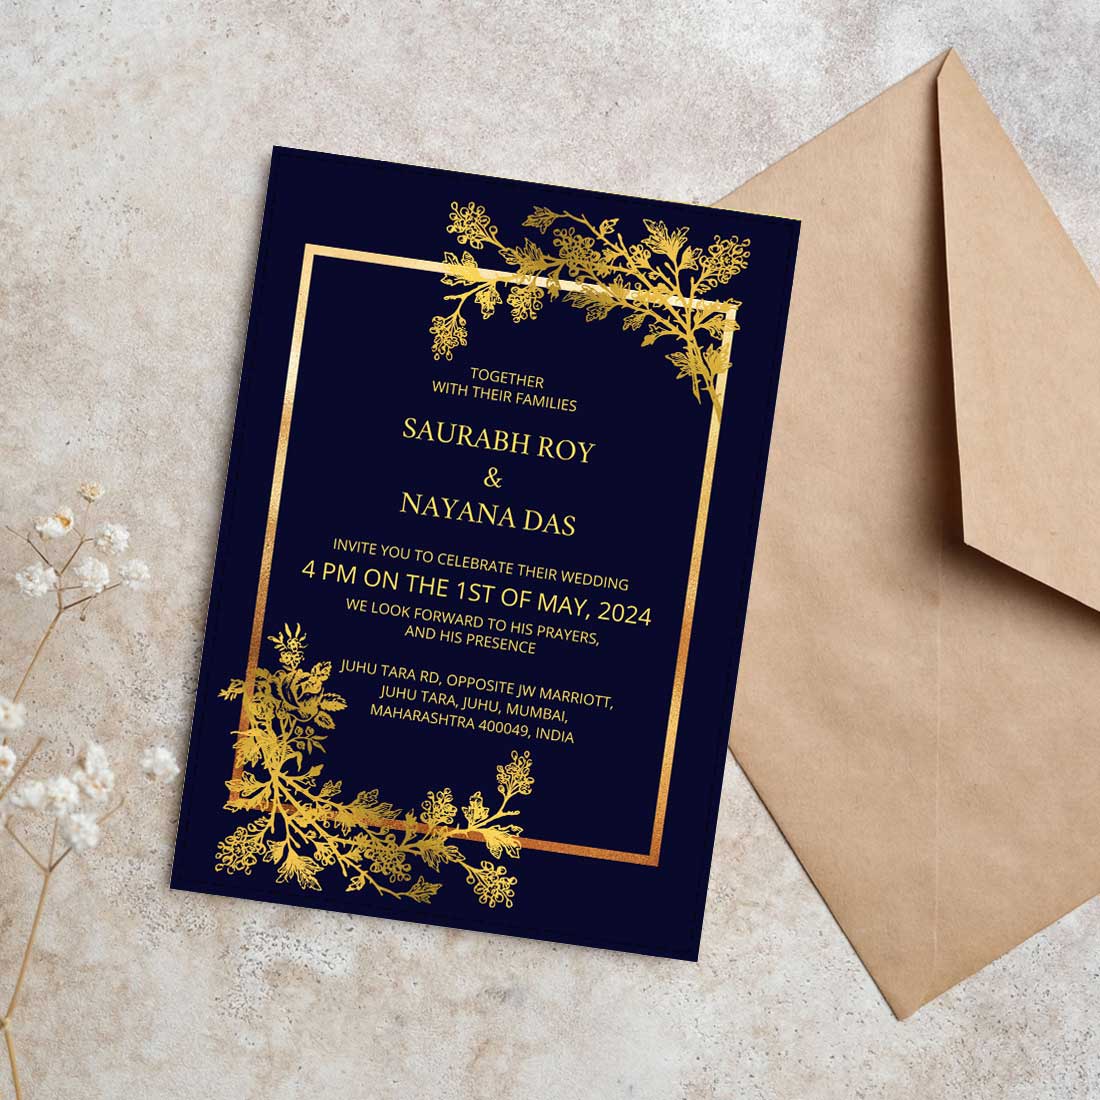 Custom Unique Wedding Card Design - Create Invitation Card for Wedding